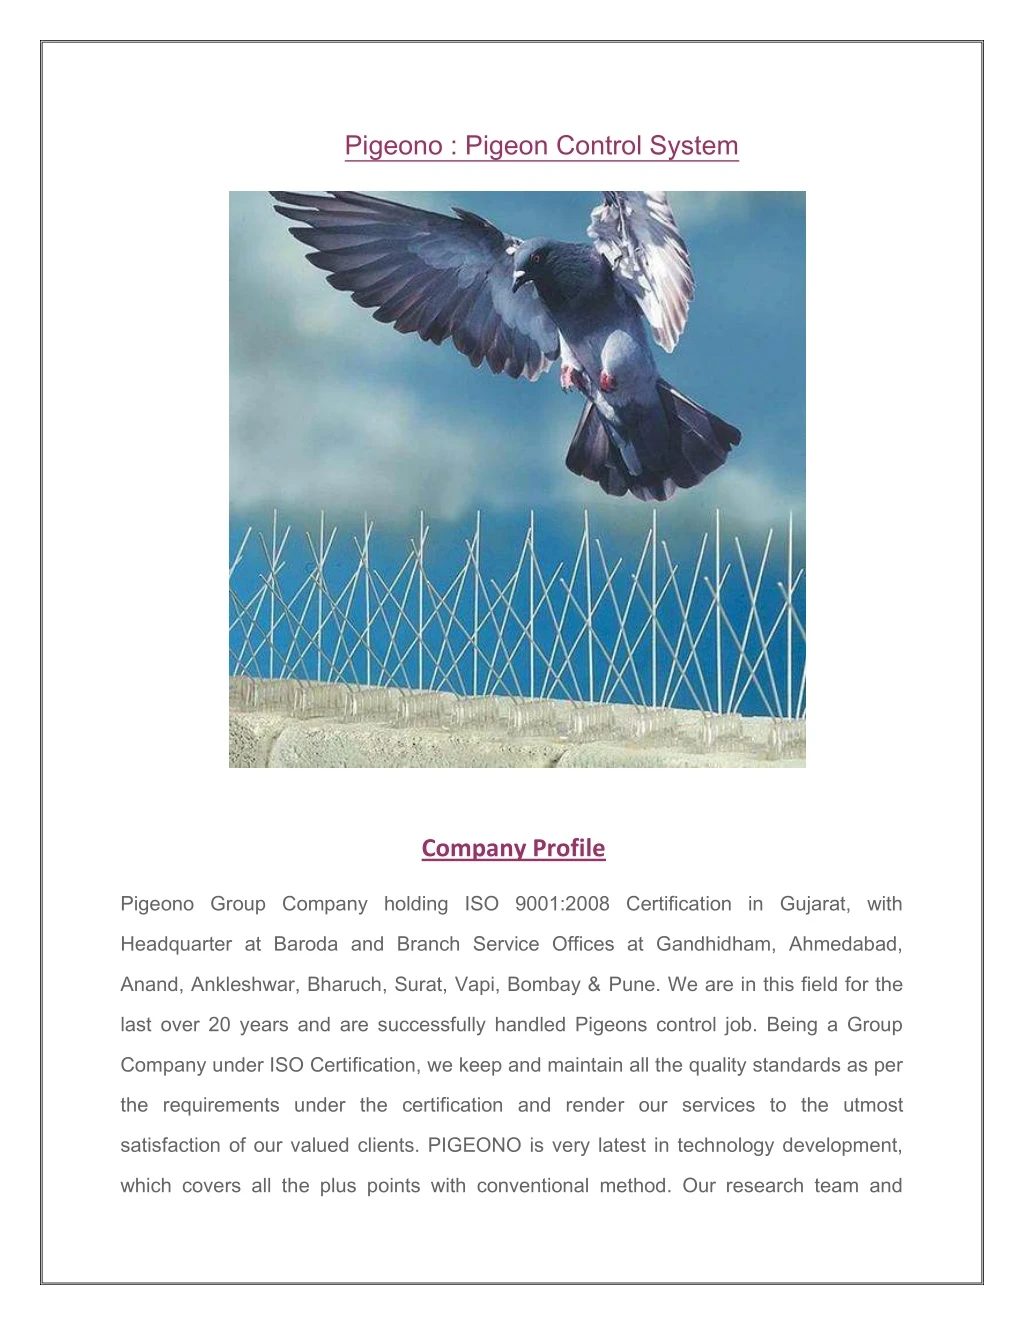 pigeono pigeon control system